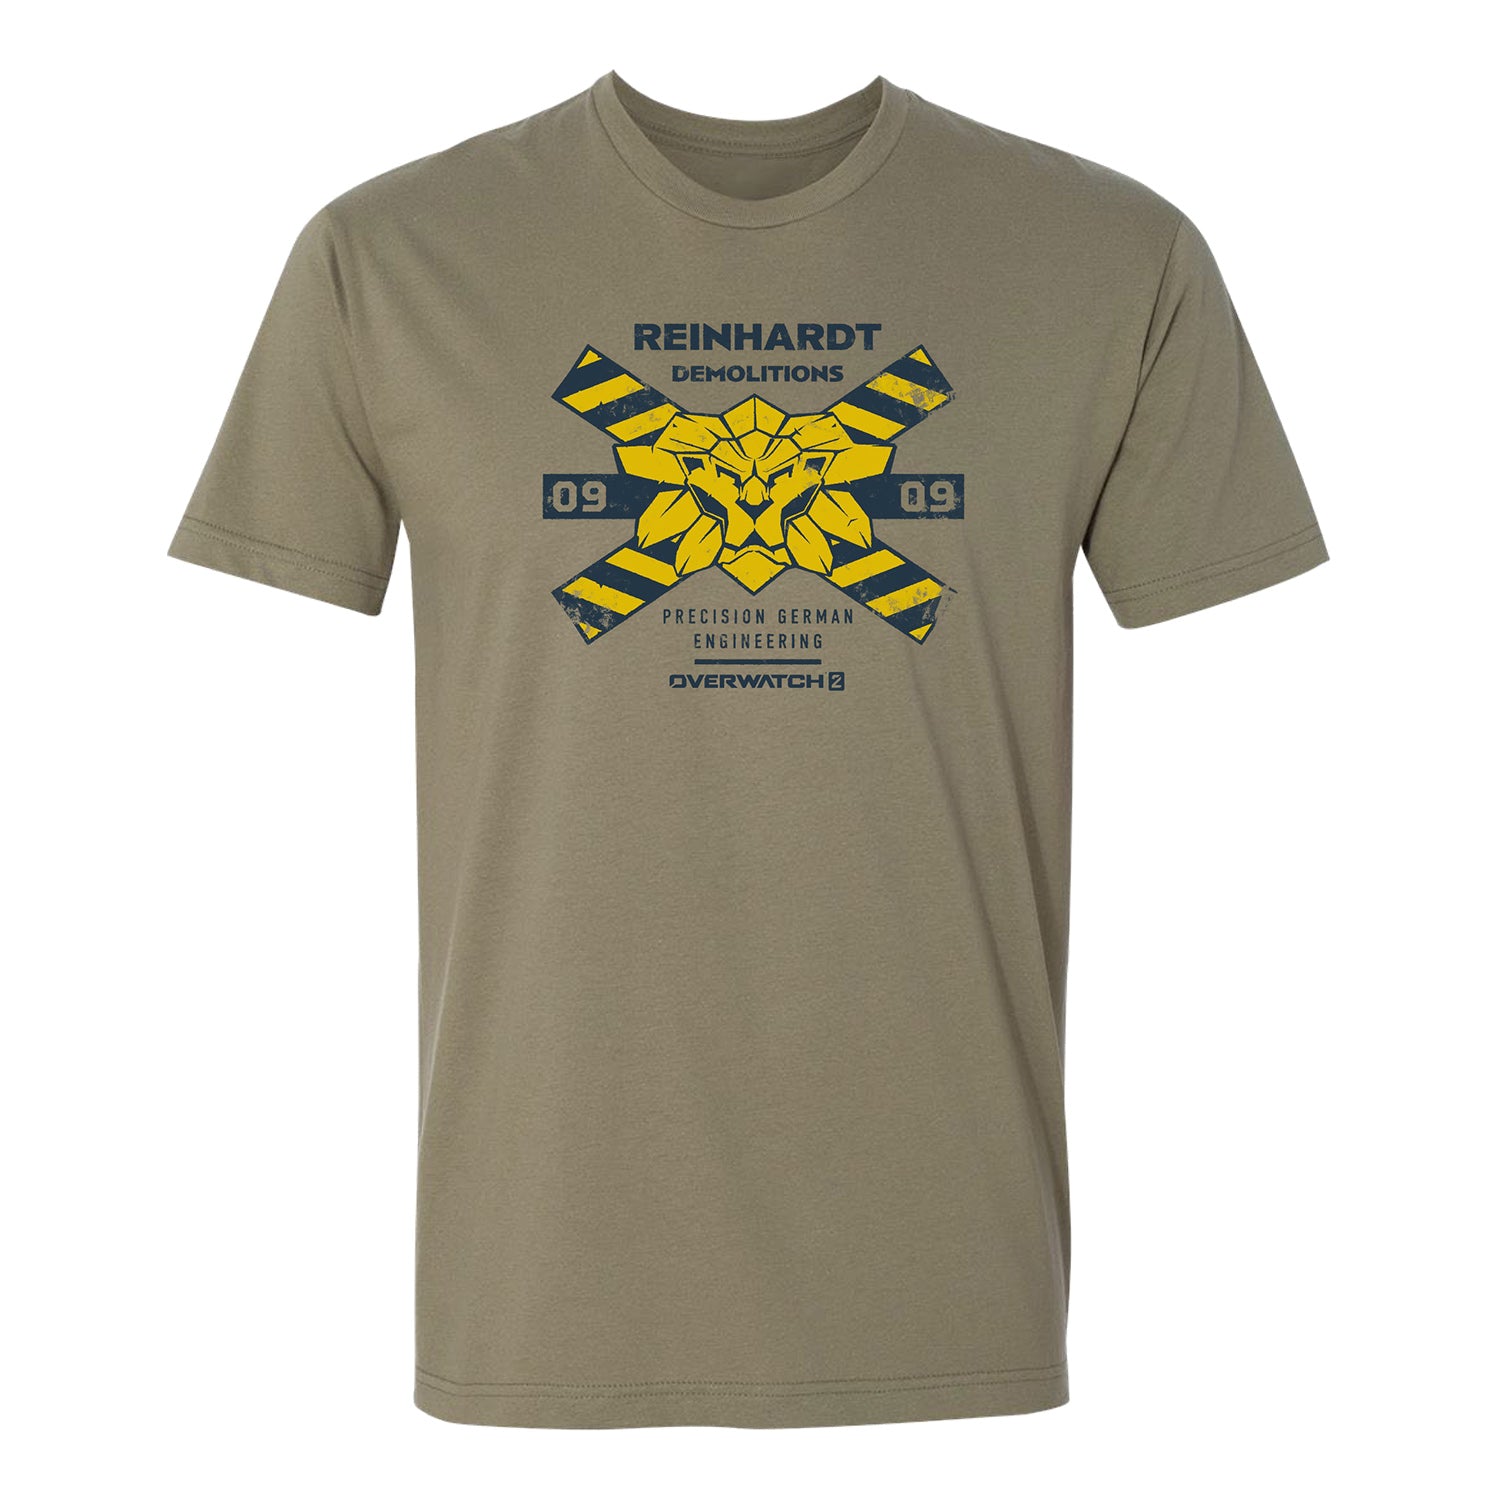 Overwatch 2 Reinhardt Demolitions Olive Green T-Shirt - Front View